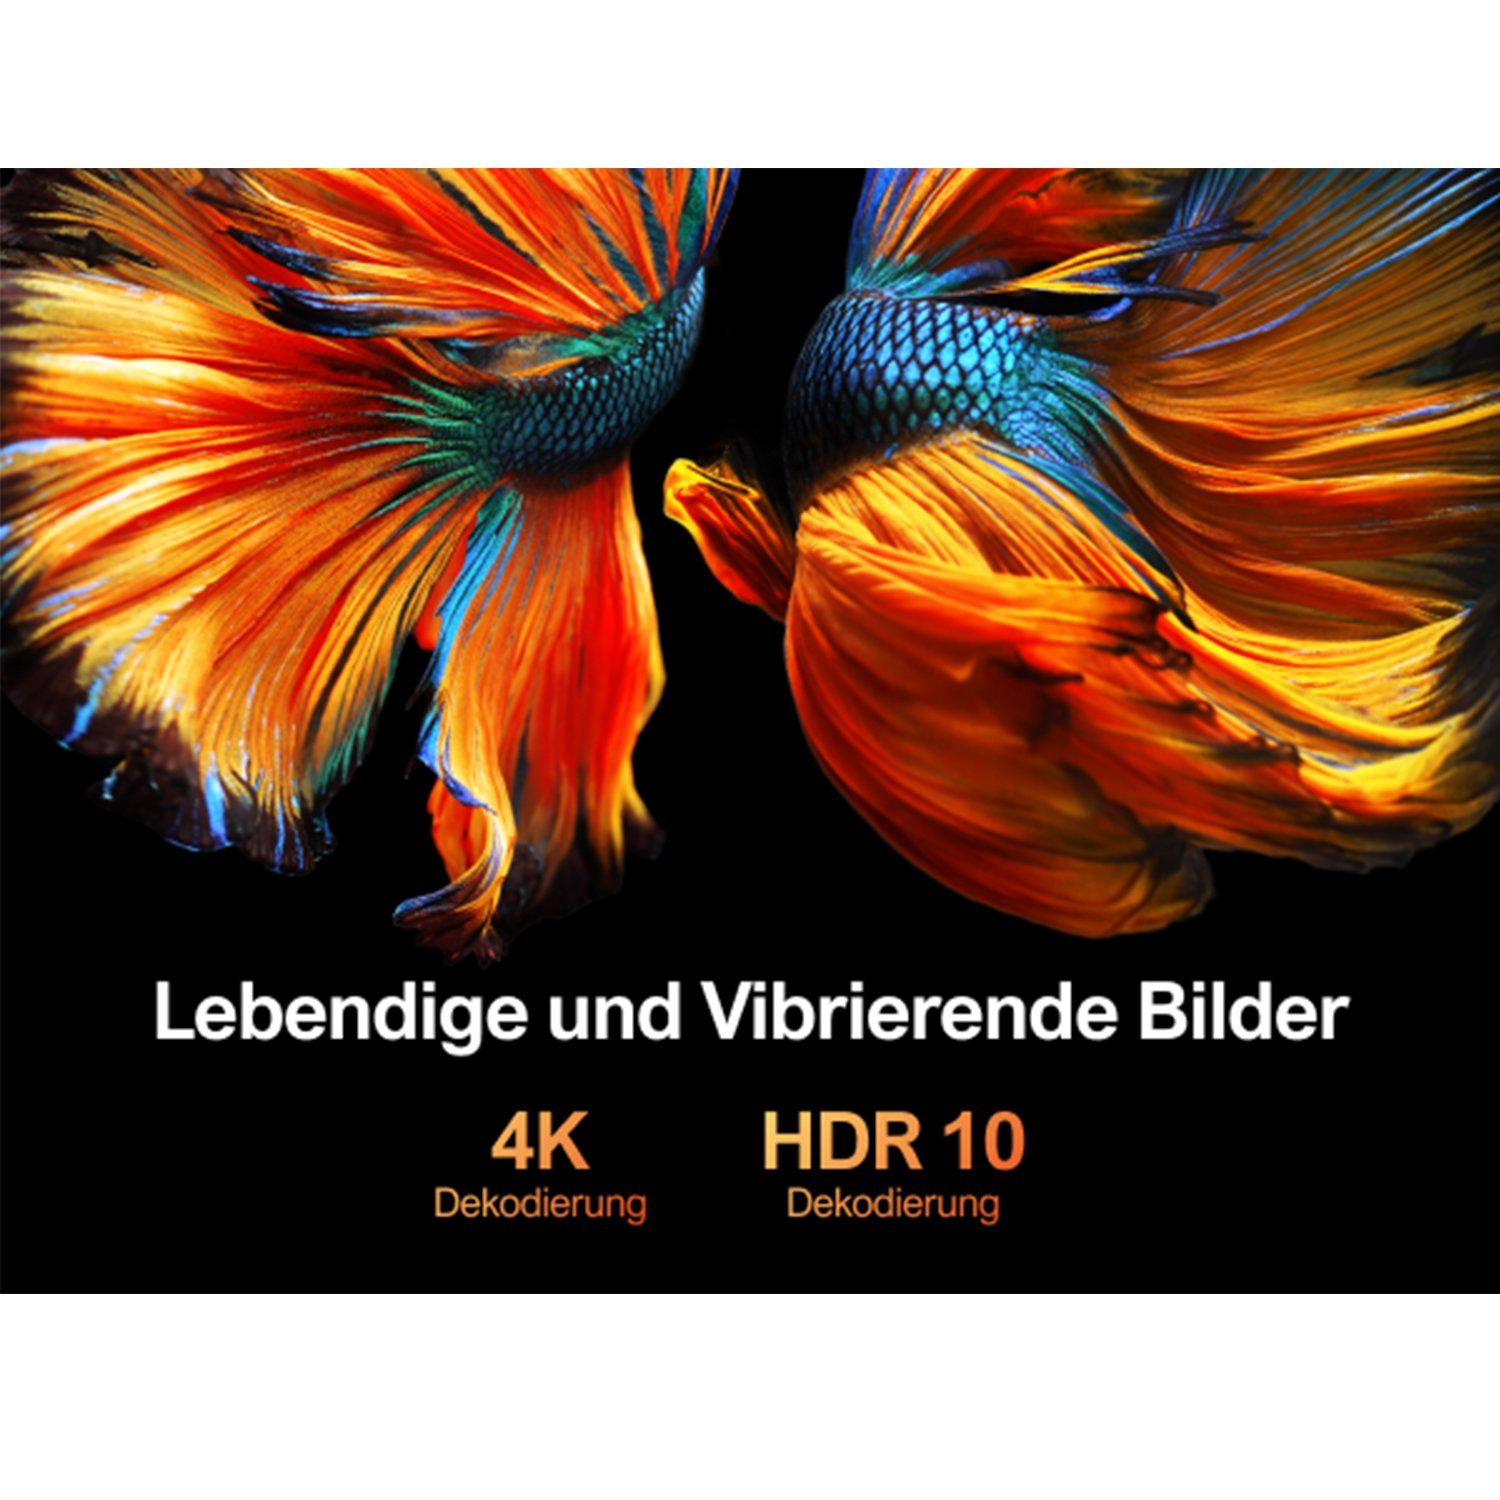 lm, Full 15000:1, Beamer px, (21000 Native schwarz HD x 1920 1080 Autofokus&6D-Autotrapezkorrektur) Ultimea HD,4K-Decodierung&HDR10, Full 1080P